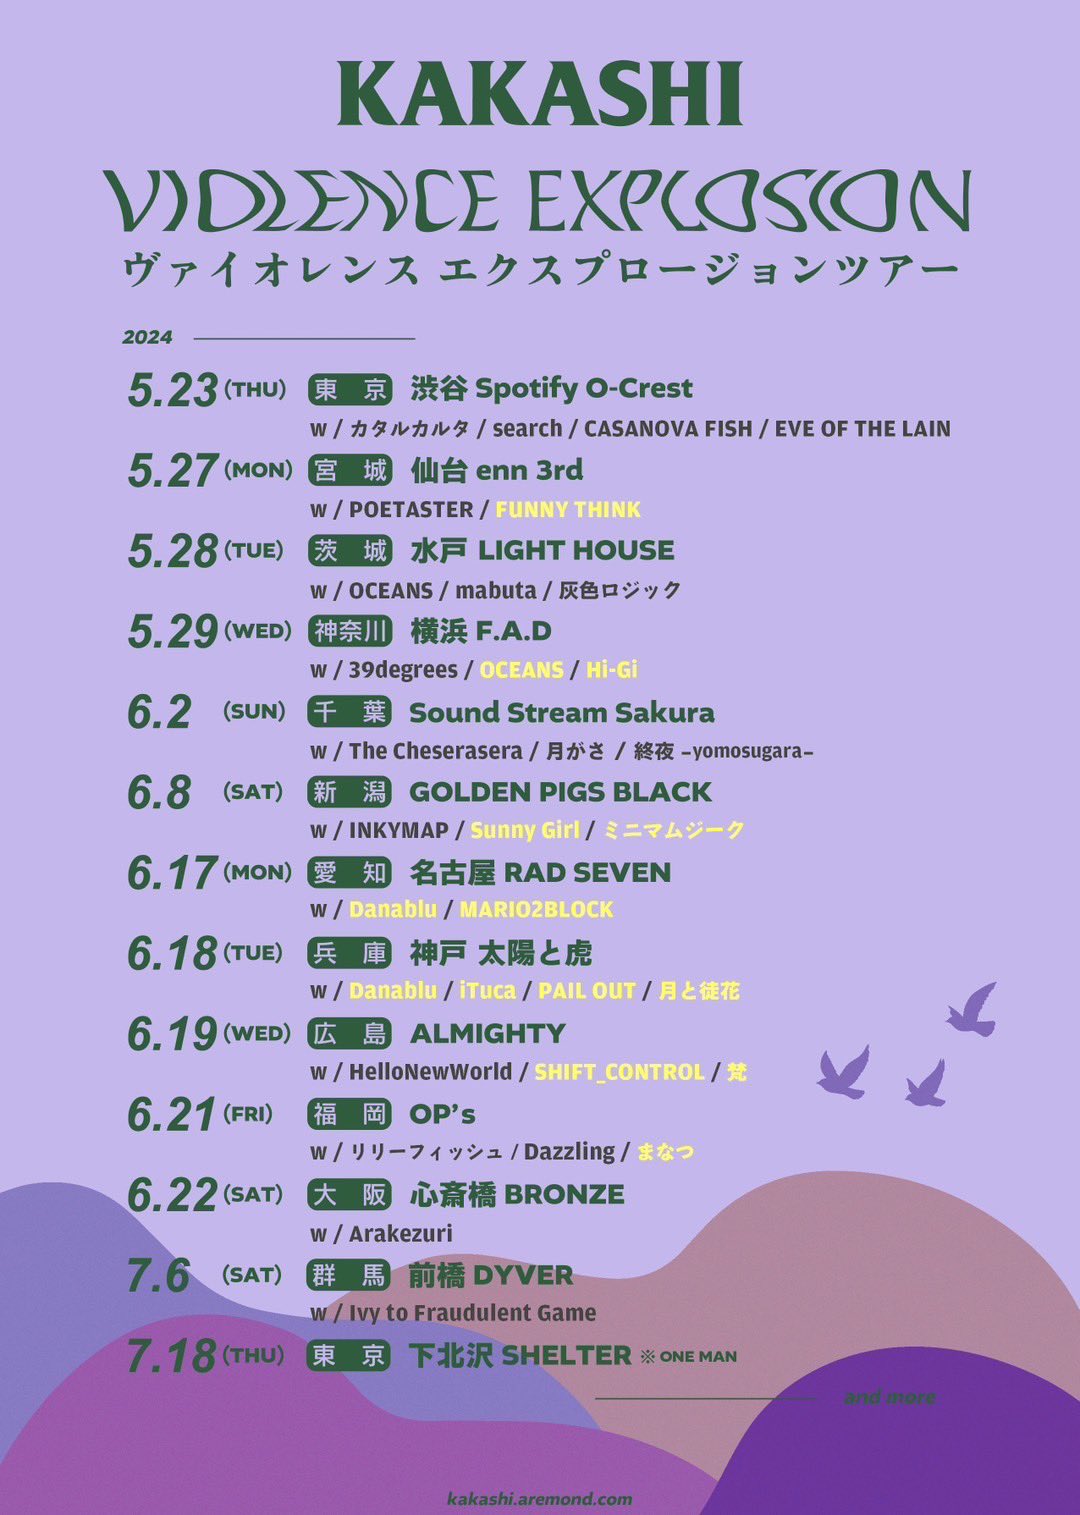 KAKASHI「Draw the Rainbow」 Release tour ヴァイオレンスエクスプロージョンツアー